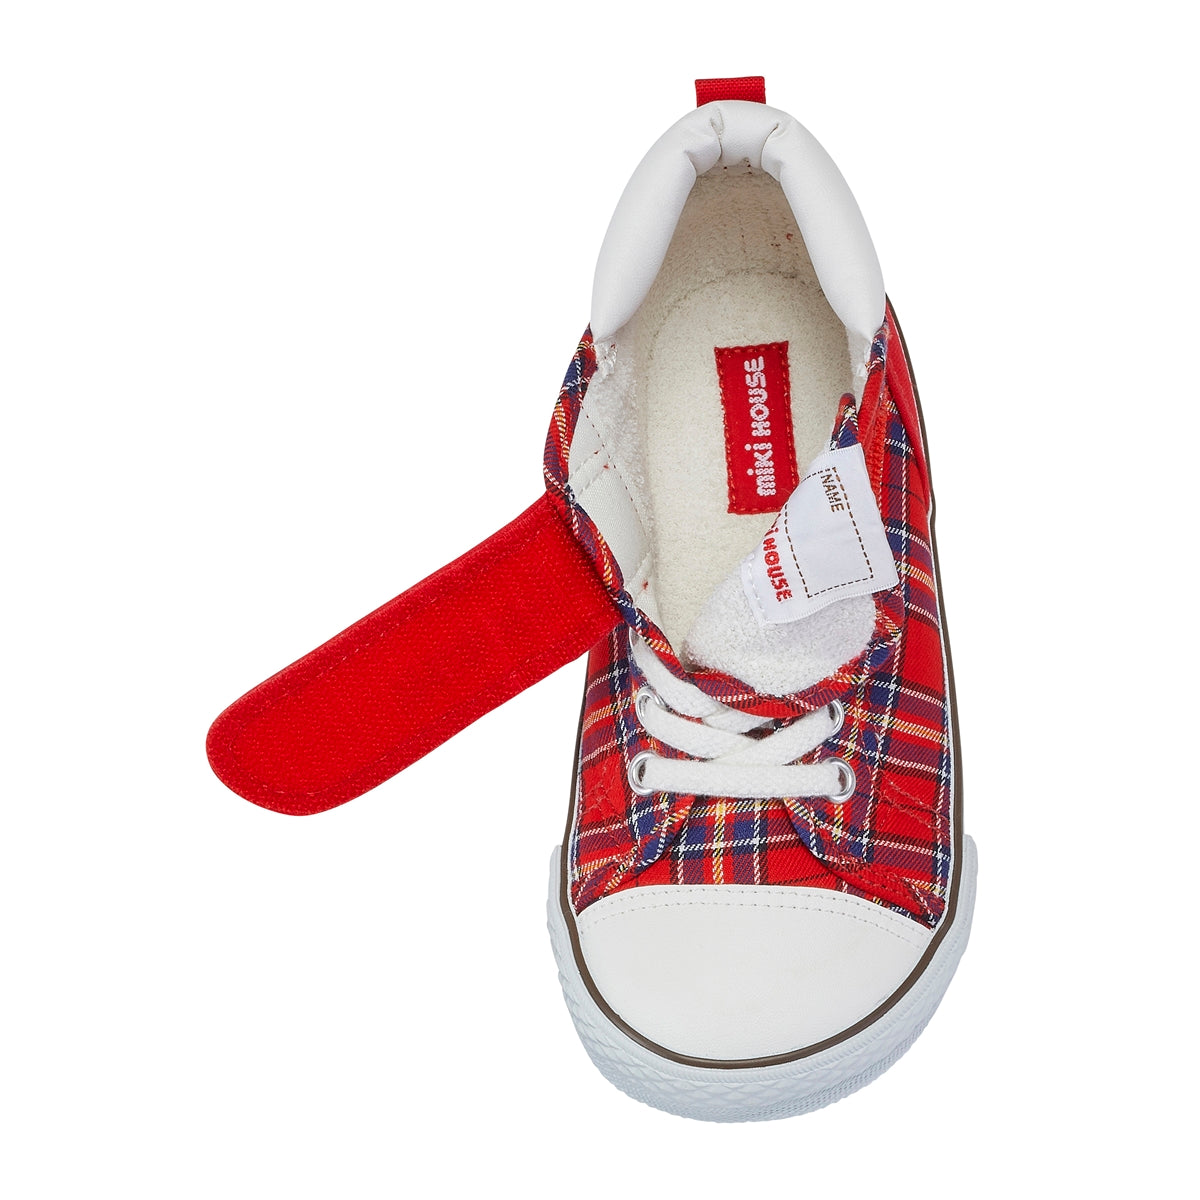 Toddler Girls' Nabi Colorblock Lace-up Zipper Sneakers - Cat & Jack™ 7t :  Target